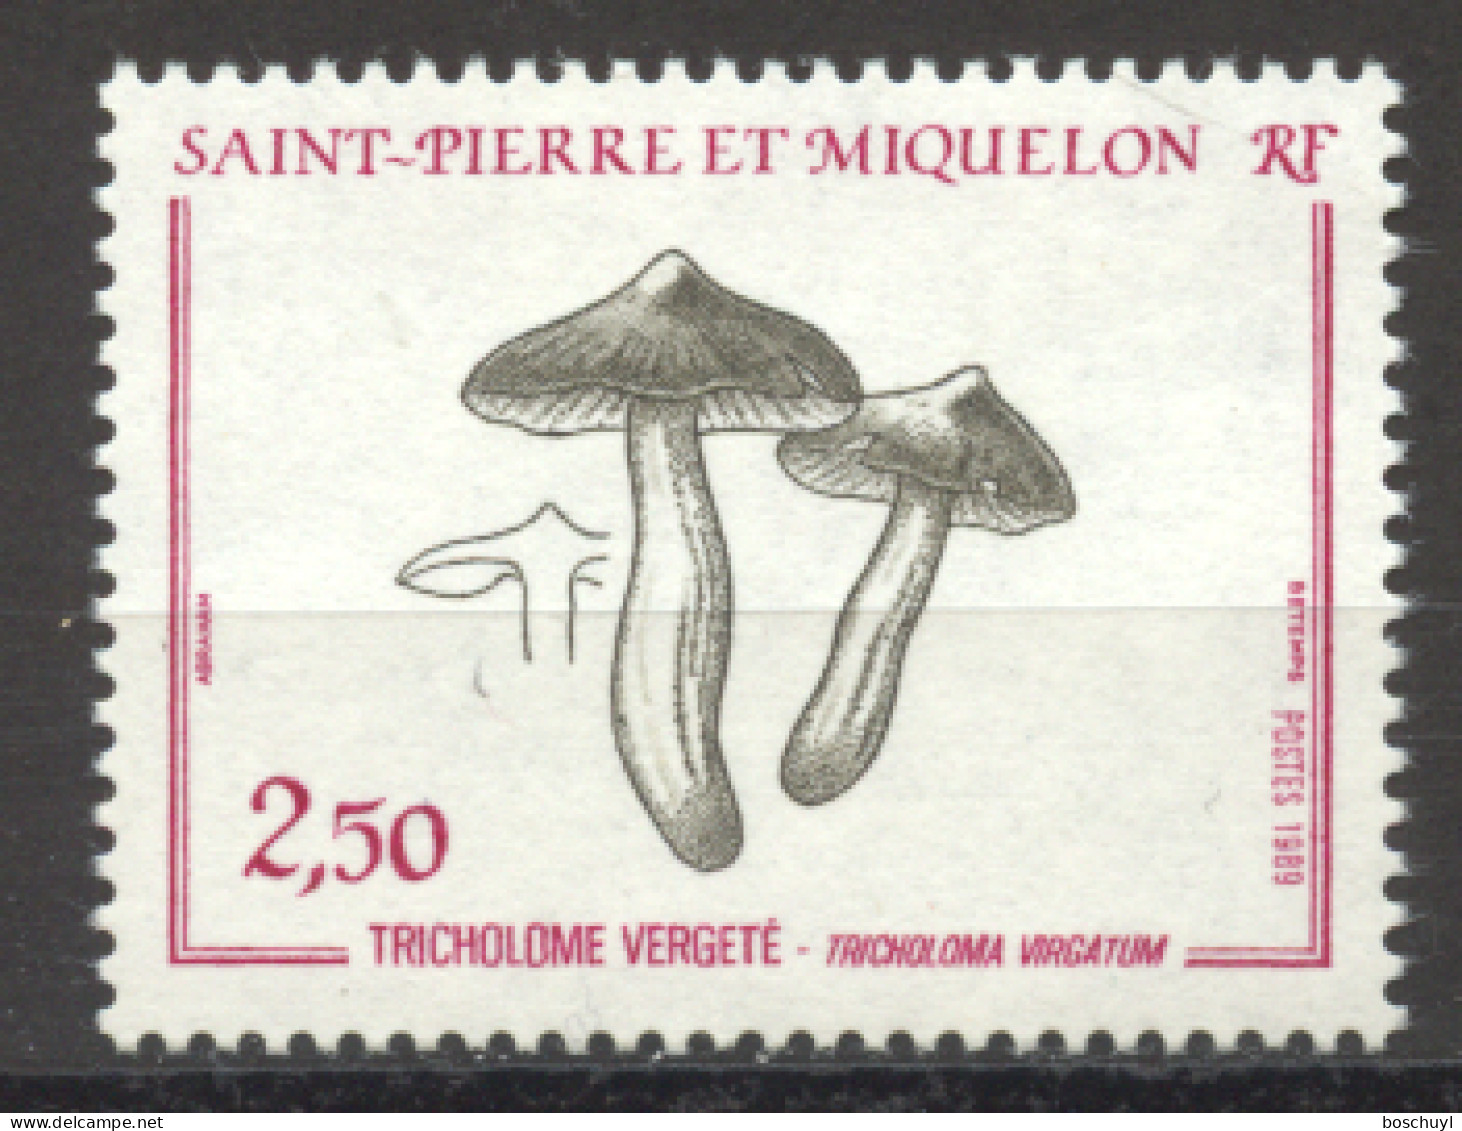 St Pierre And Miquelon, 1989, Mushroom, MNH, Michel 569 - Ongebruikt